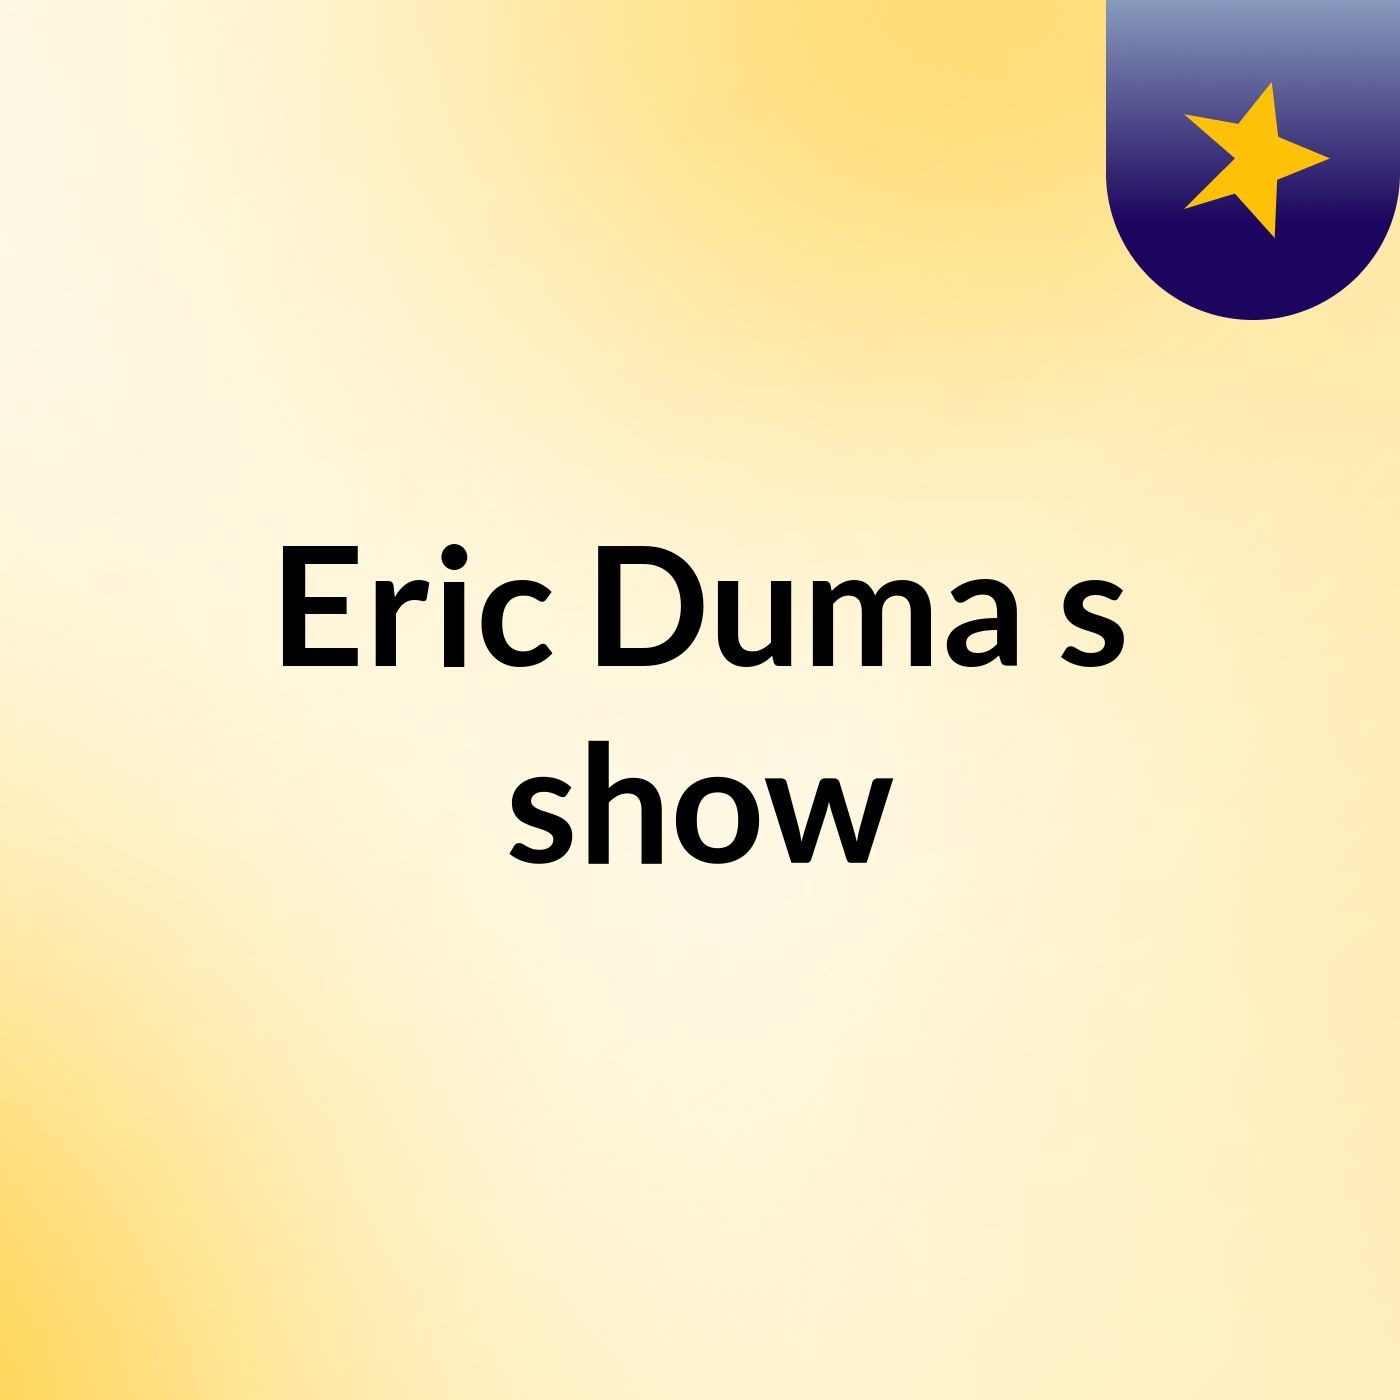 Eric Duma's show